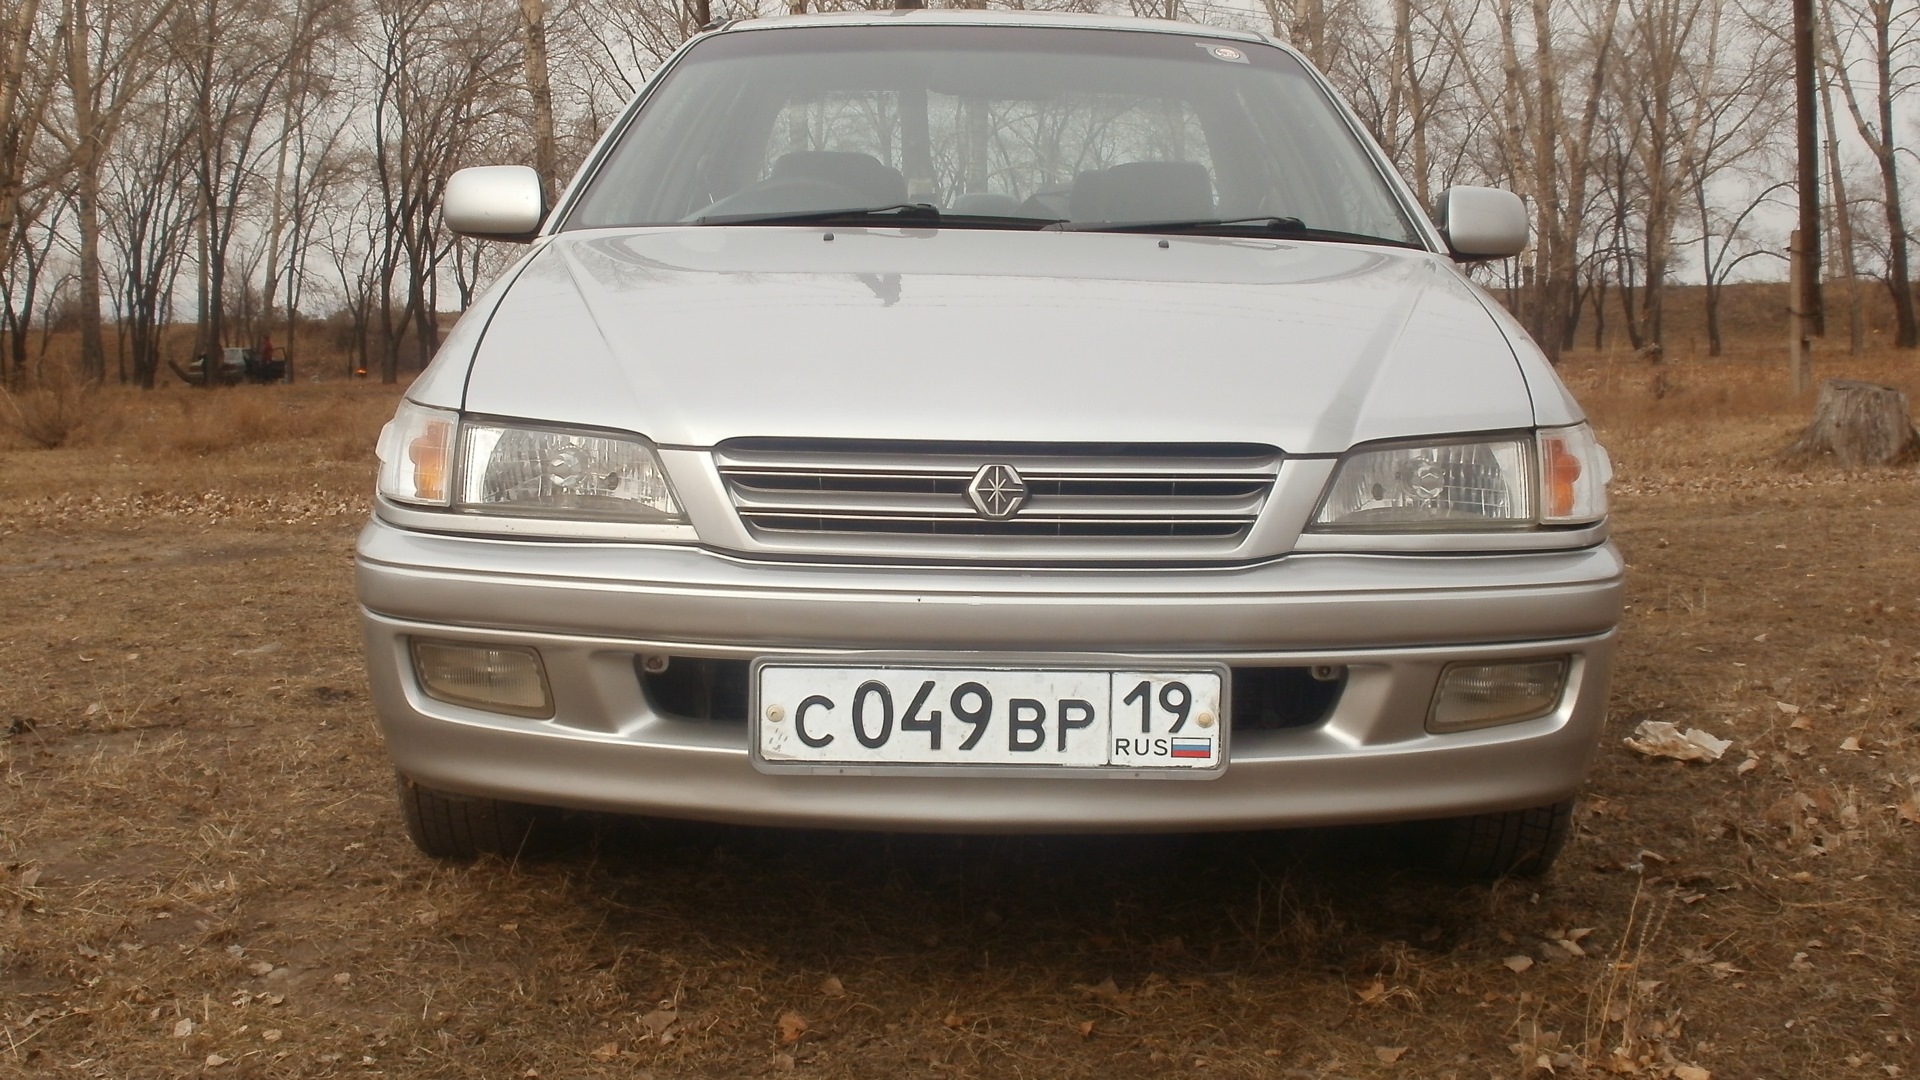 Тойота корона 1996 год